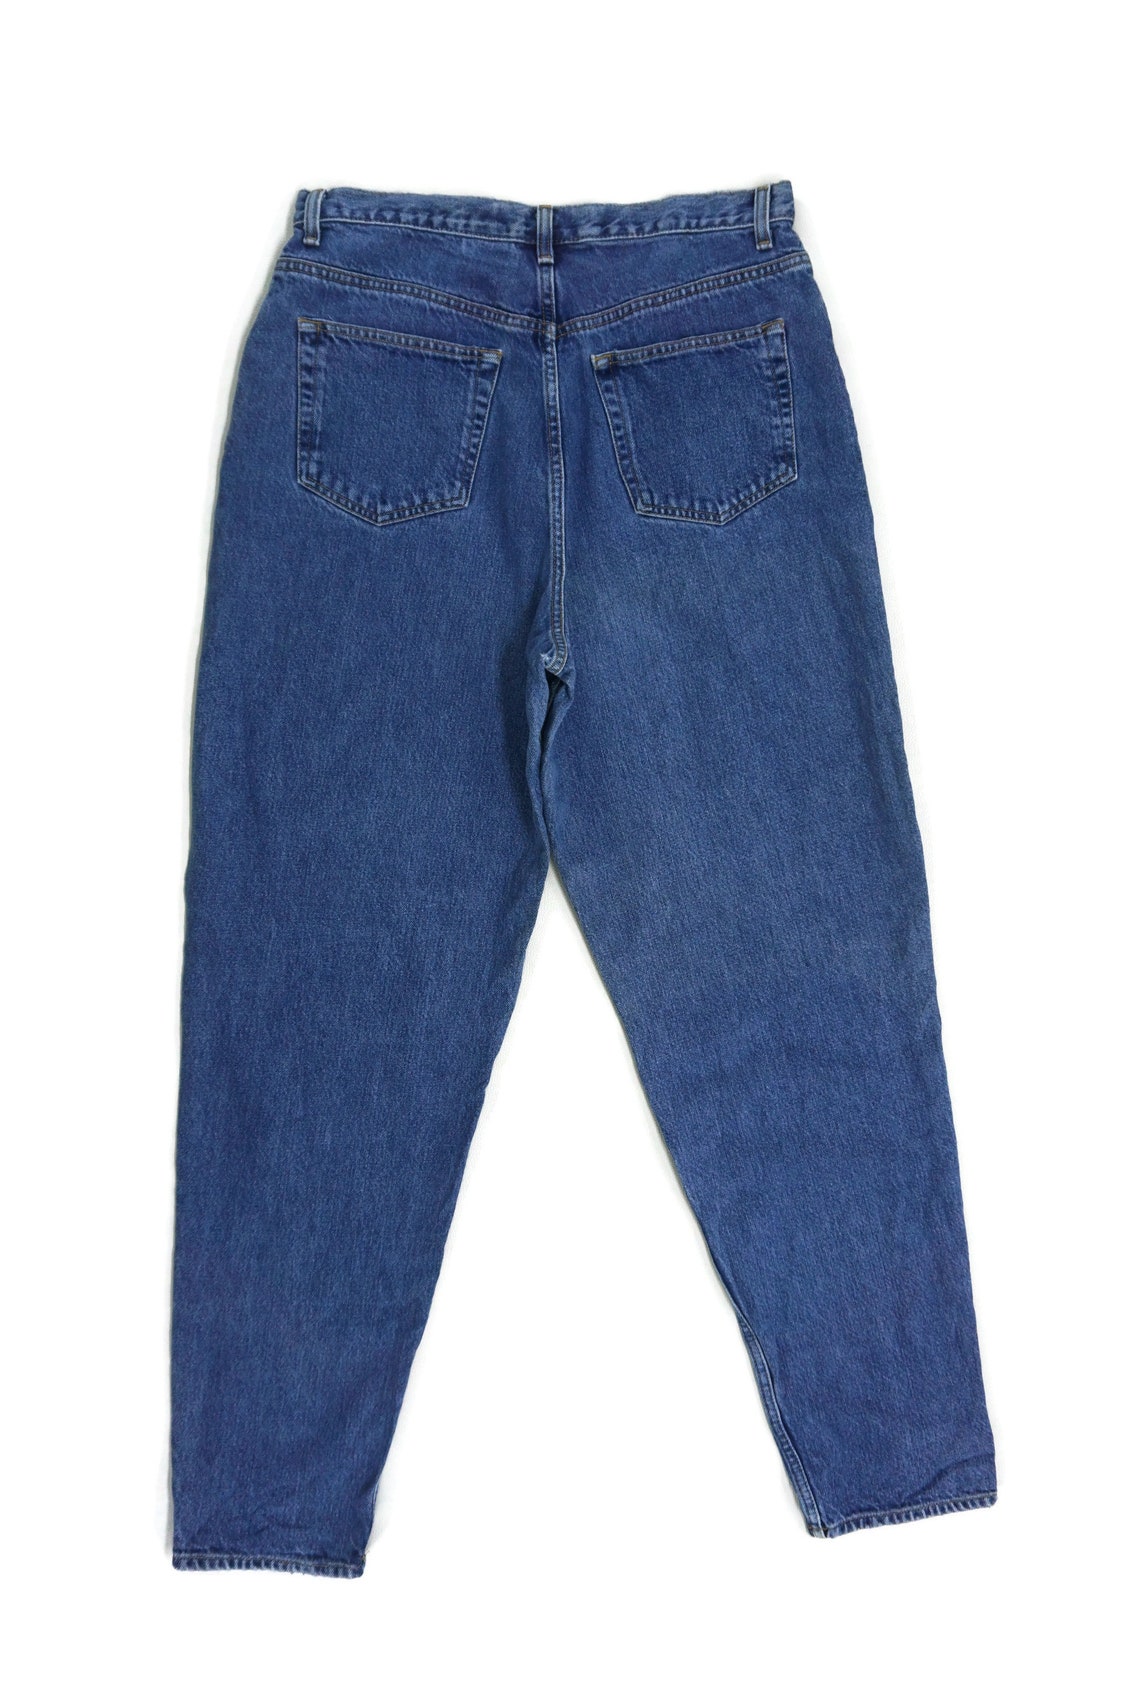 GAP Jeans Men's Size 16 W33xL33 Vintage Gap Reverse Jeans | Etsy